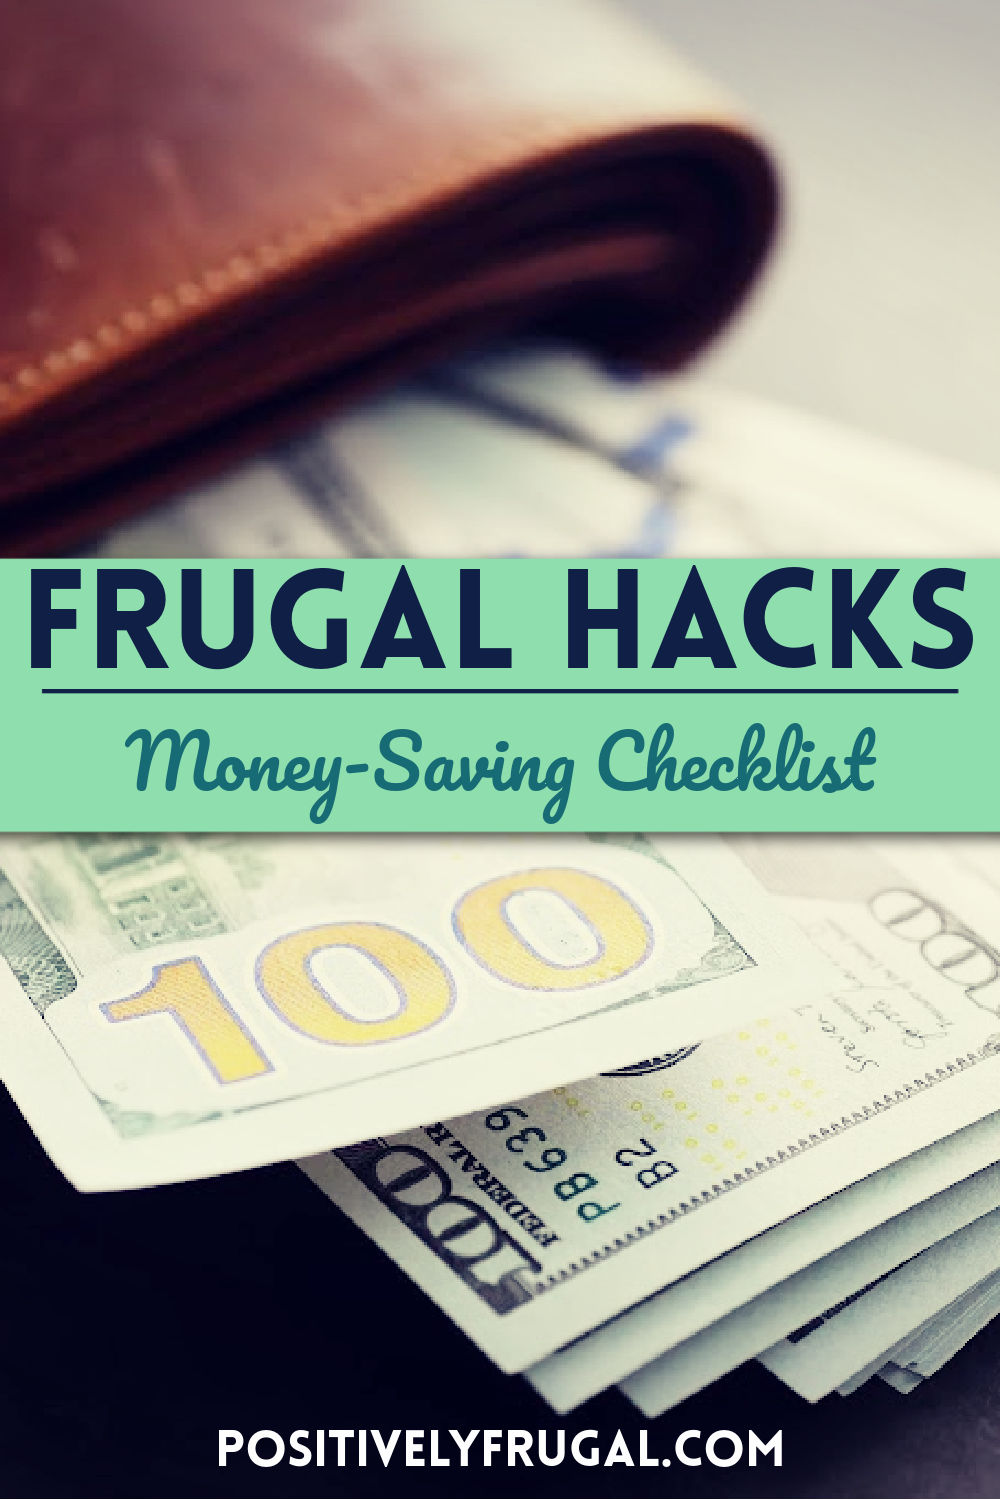 Frugal Hacks Money Saving Checklist by PositivelyFrugal.com